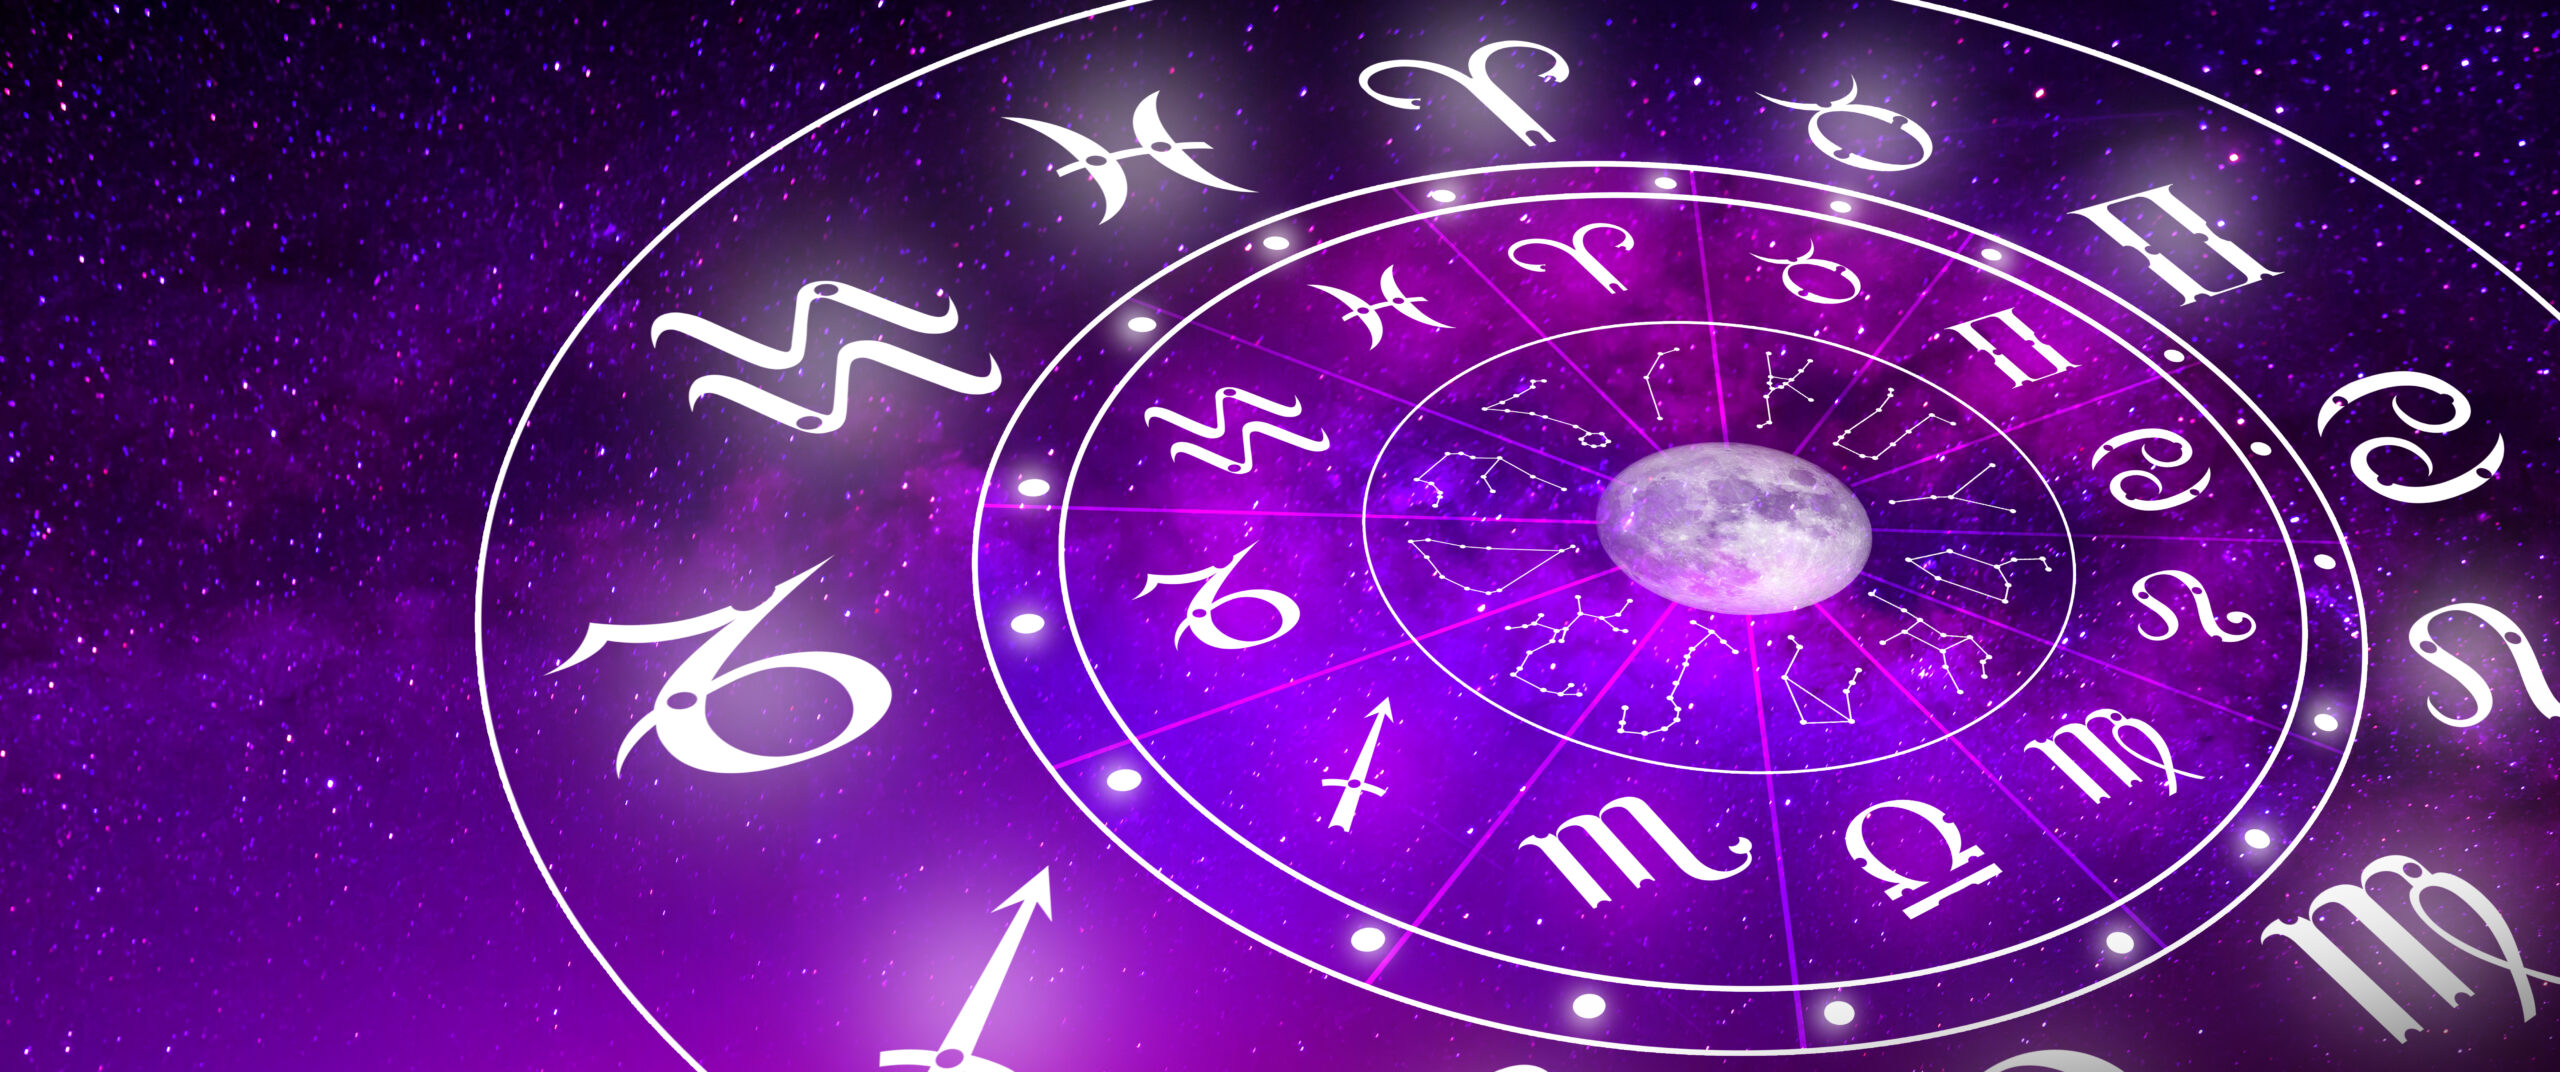 February 4 Zodiac: Aquarius Traits and Compatibility